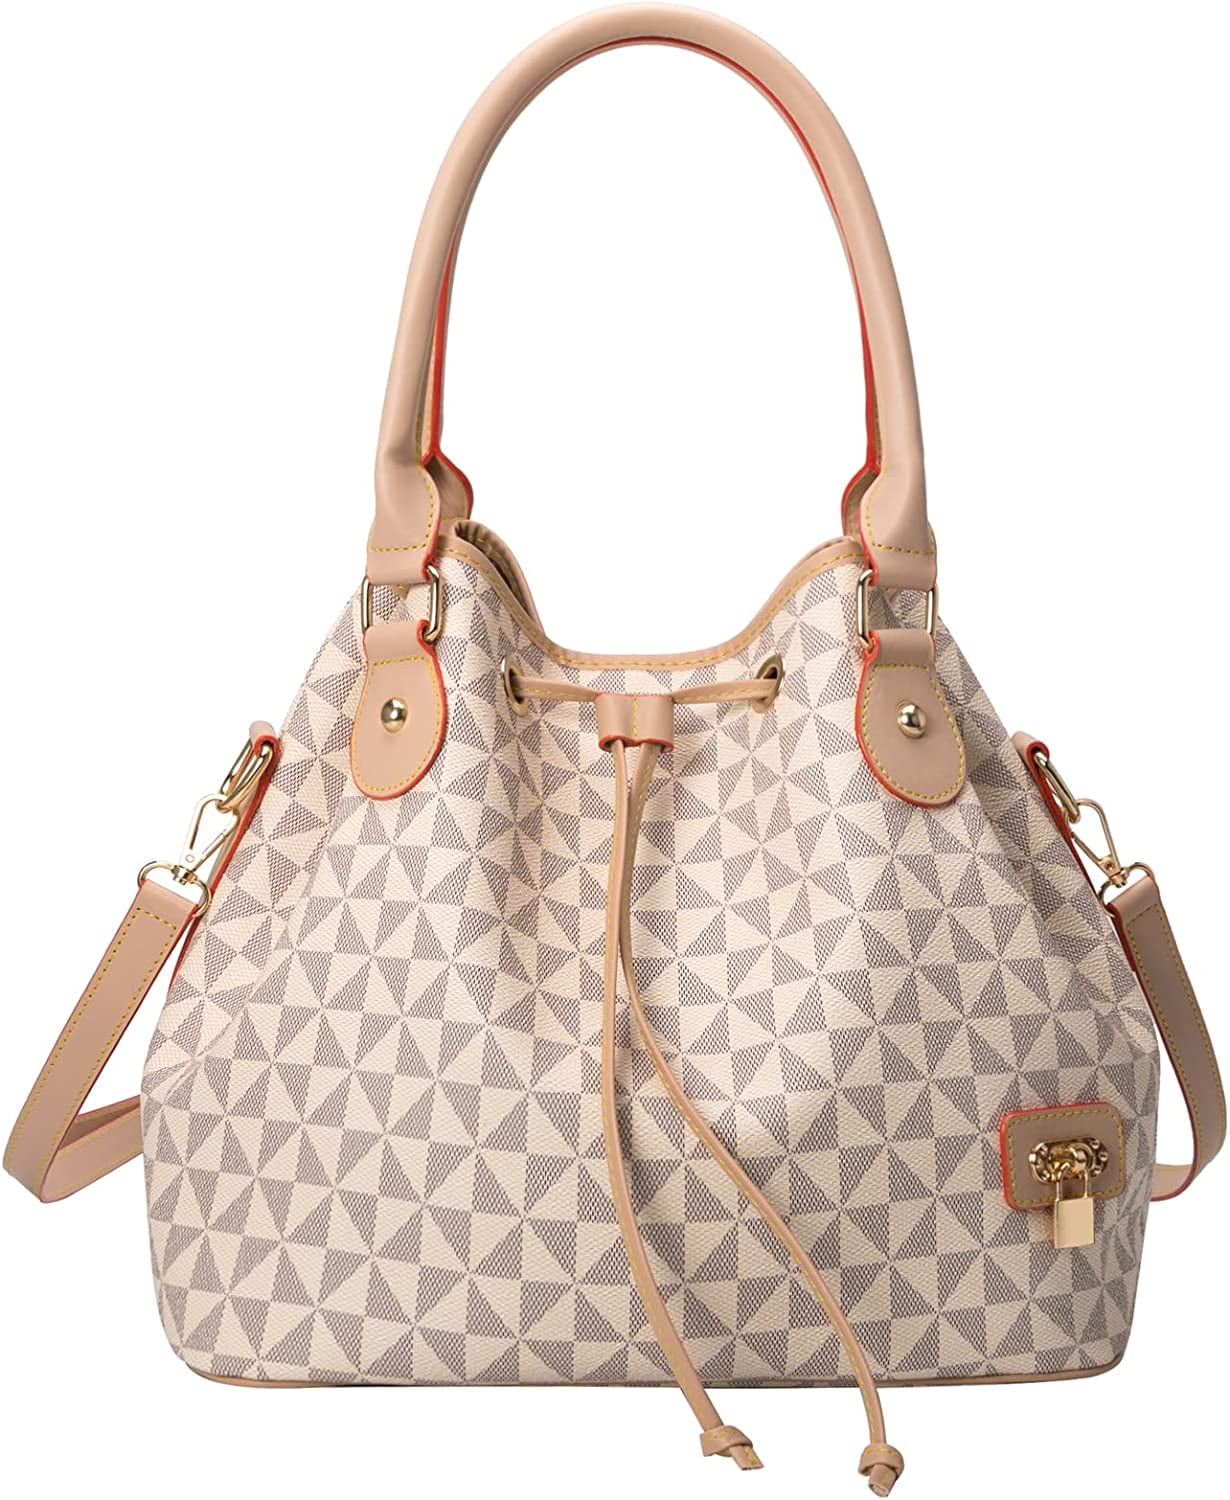 BUTIED Women s Handbags PU Leather Top Handle Shoulder Bag Crossbody Shoulder Bag Design Luxury Tote Bag e553ce5d 1ba2 4641 b301 f7063472fcfd.92a2029fbd9434a0c9ee5eb9d5307487